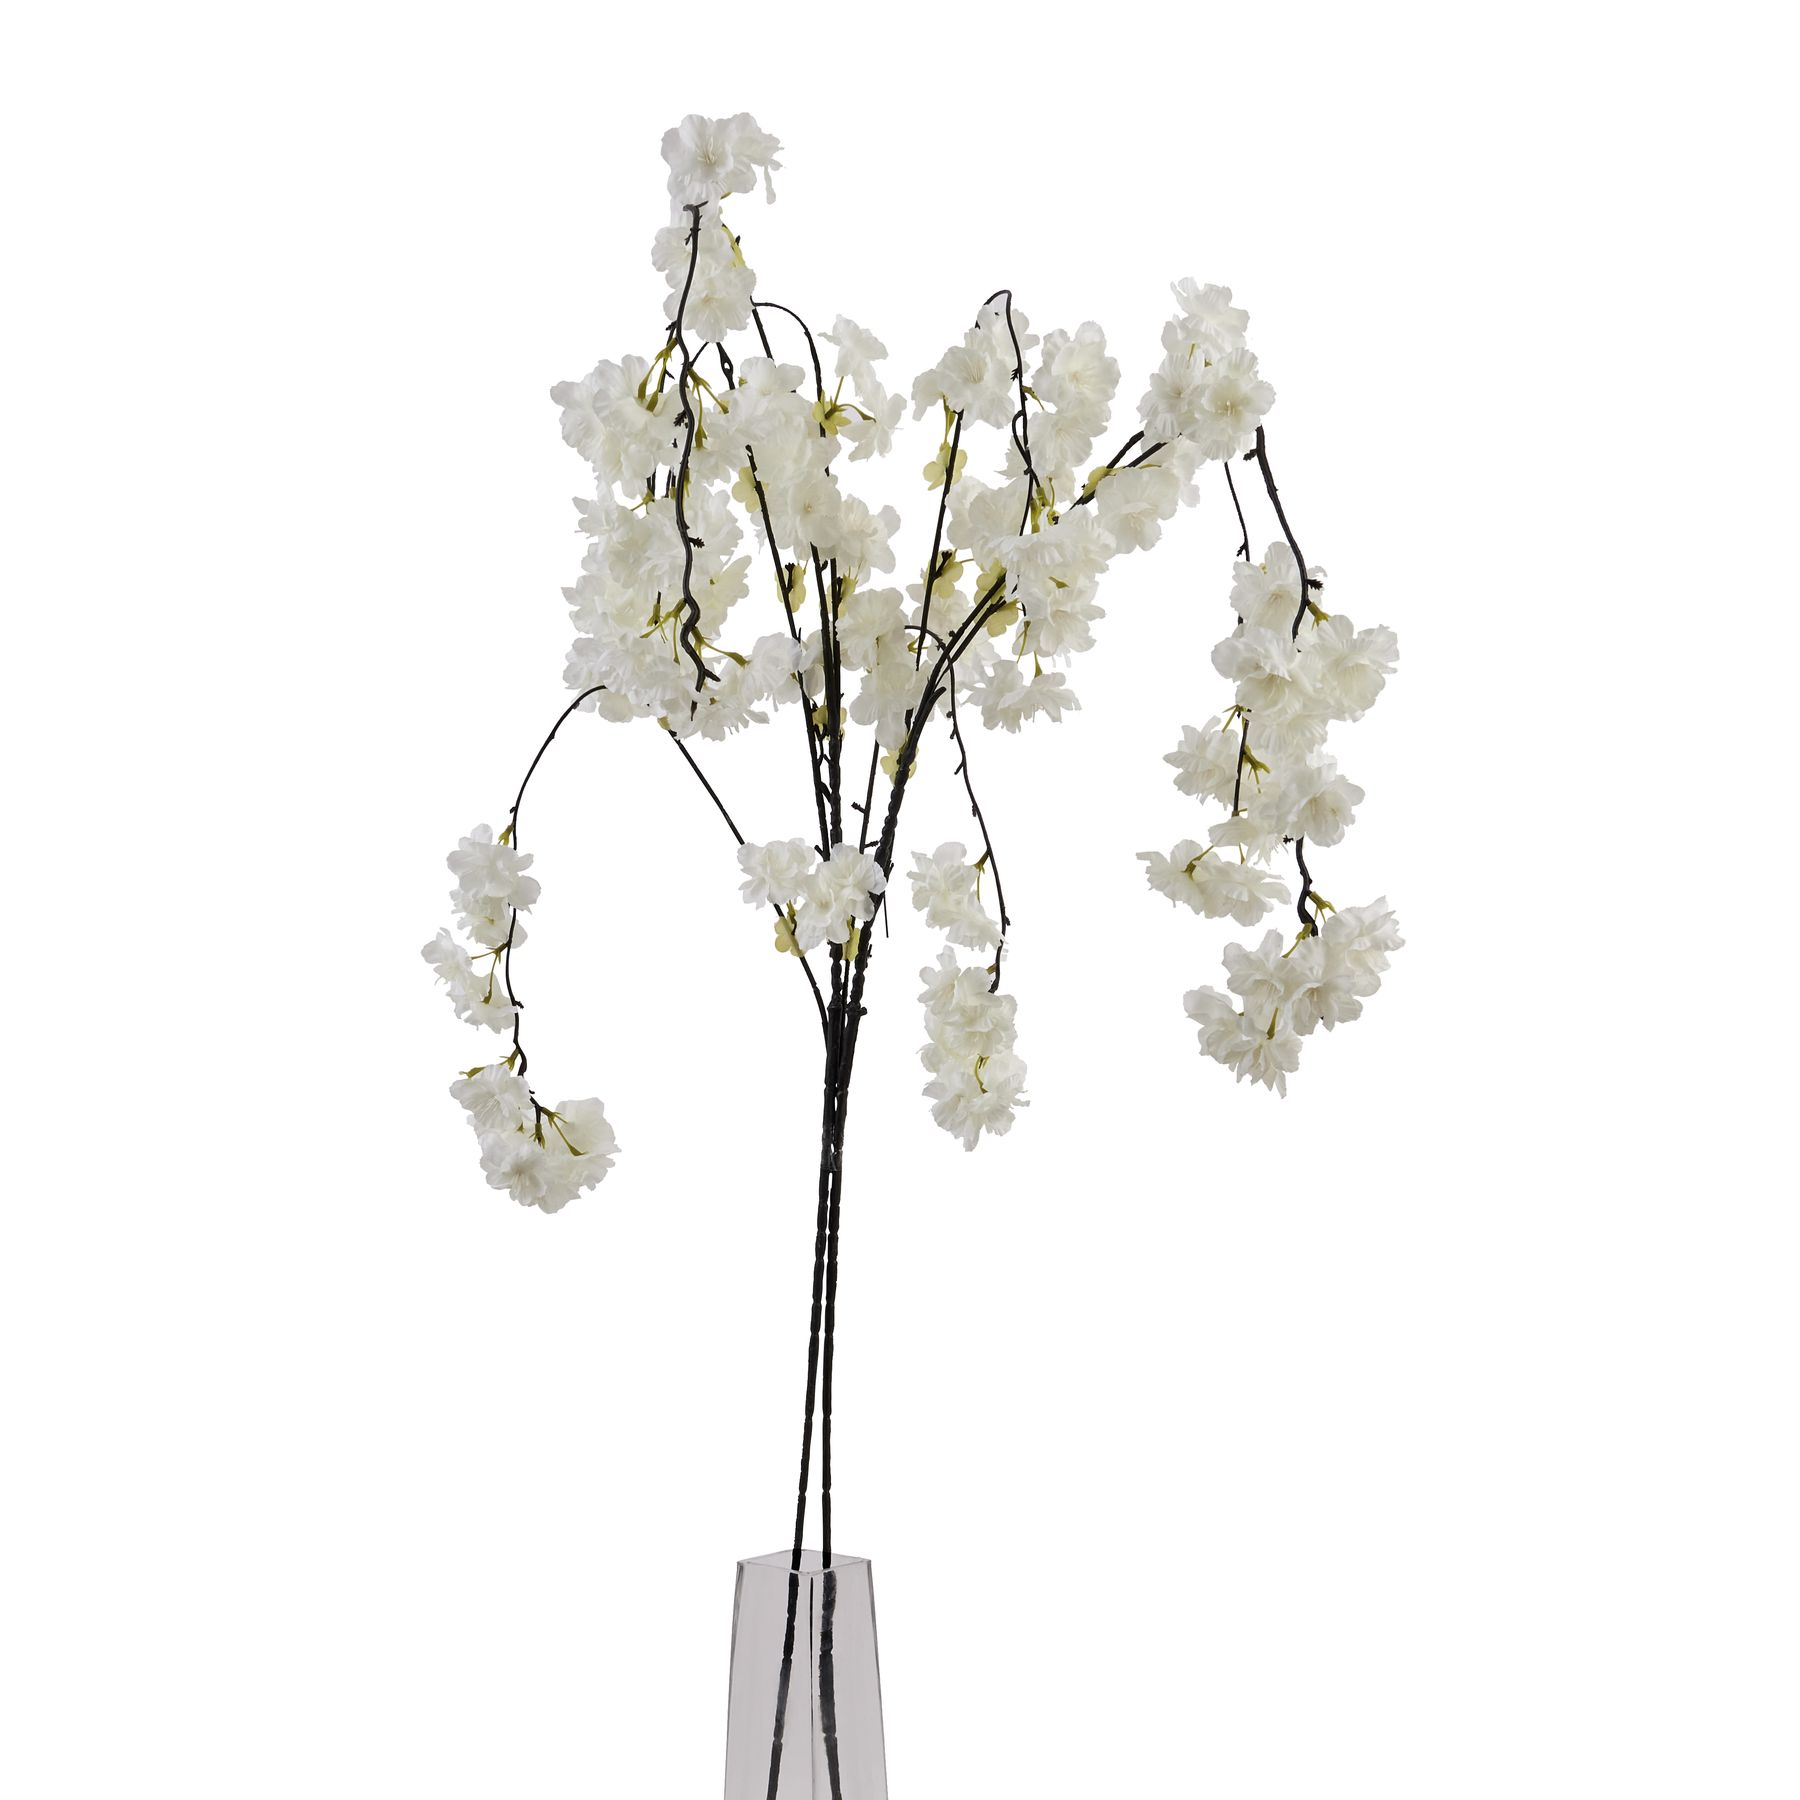 Large White Cherry Blossom Stem - Image 1